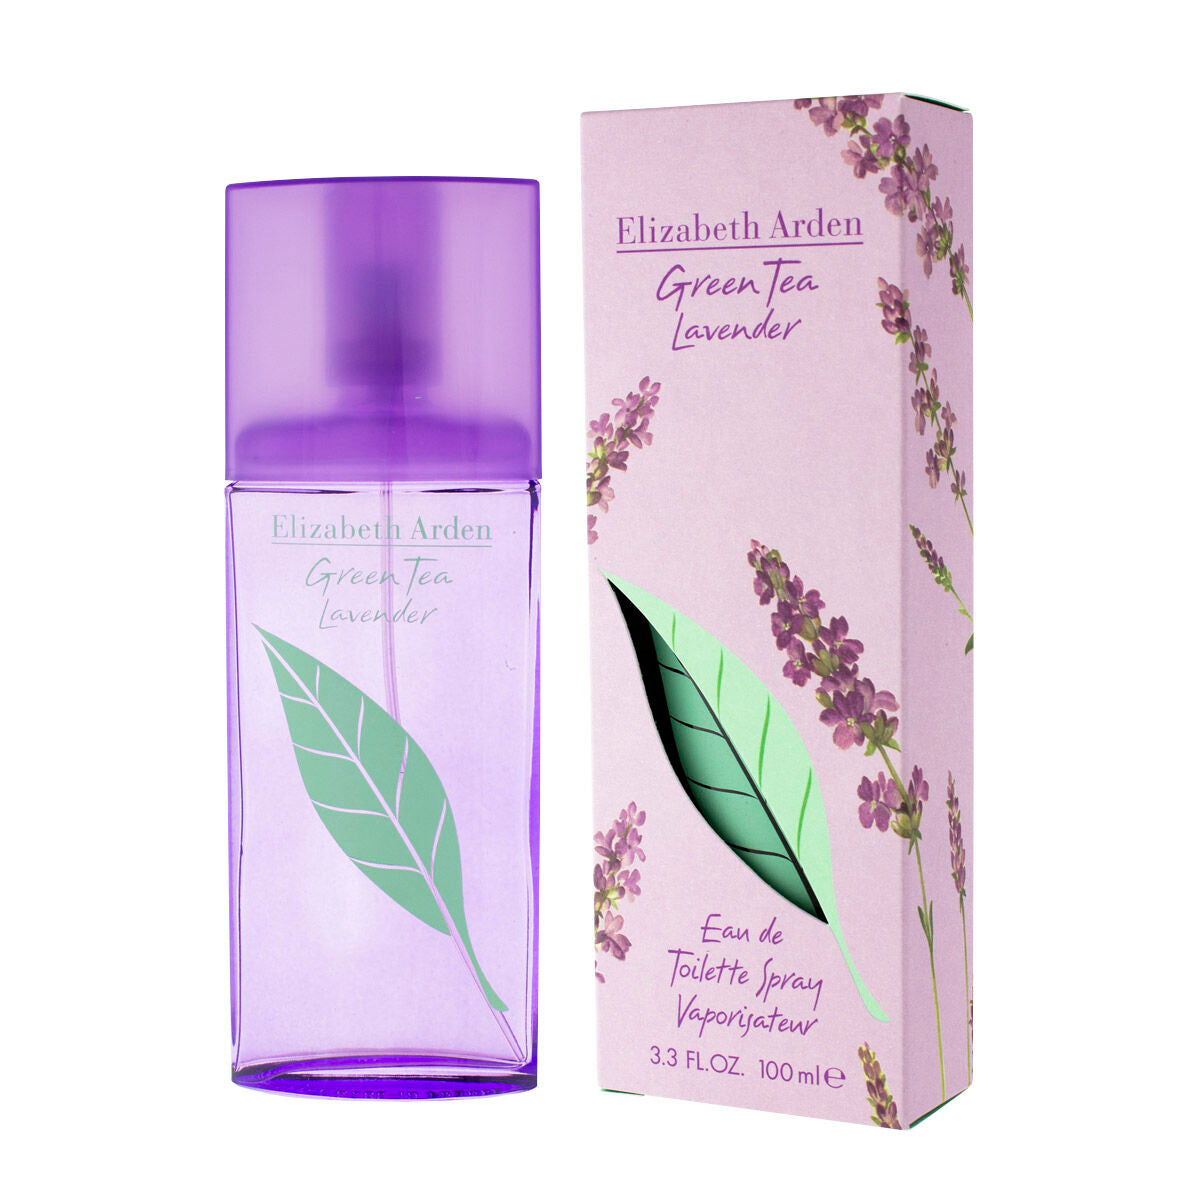 Women's Perfume Elizabeth Arden EDT Green Tea Lavender 100 ml